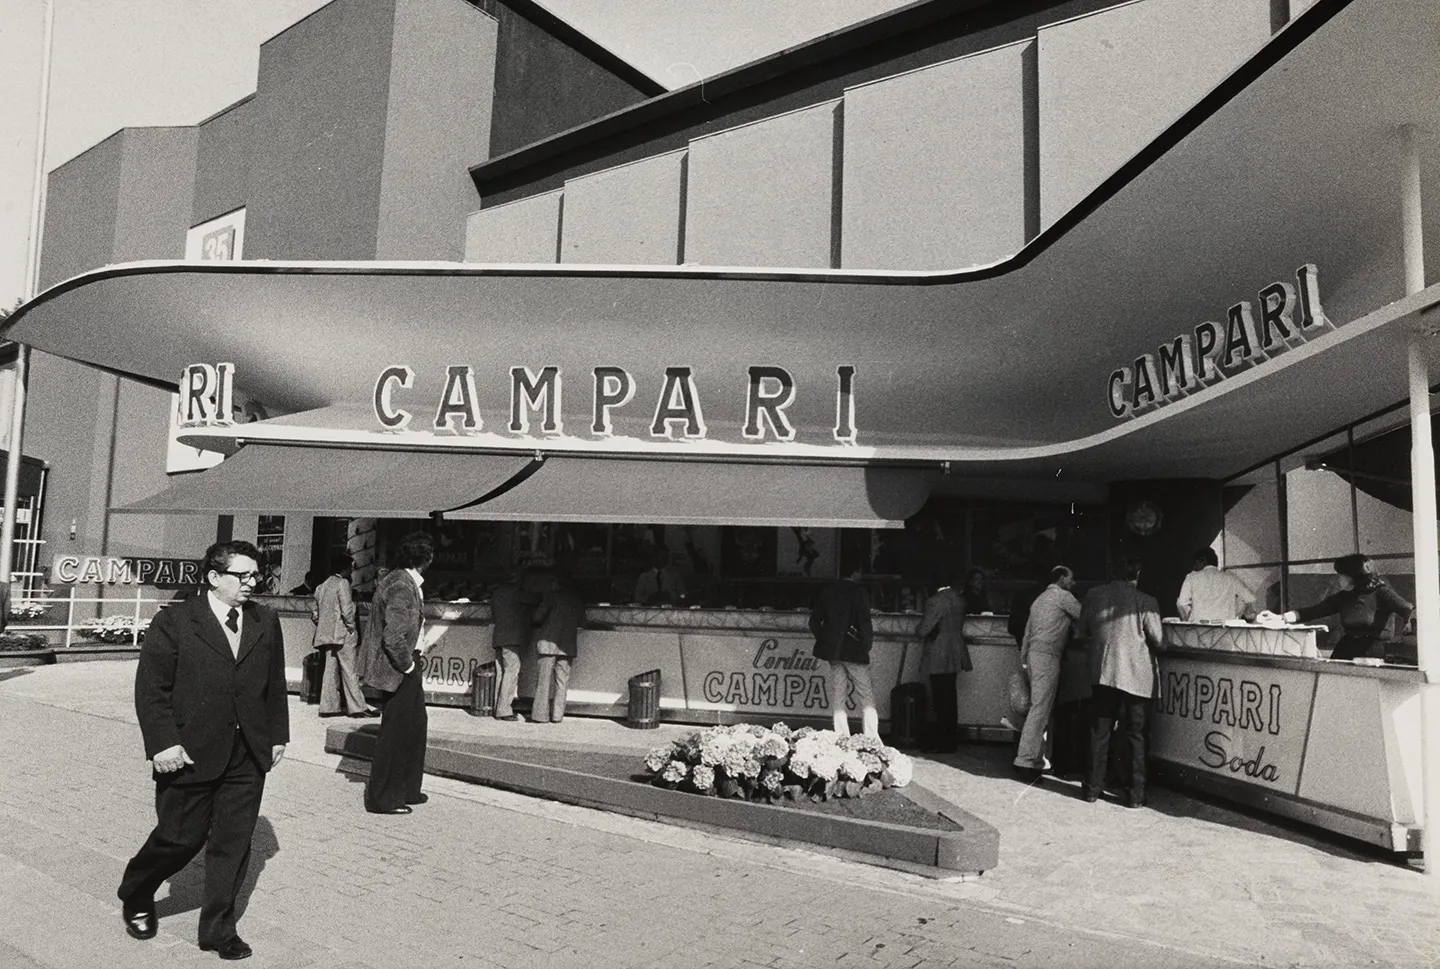 Campari kiosk at the 1977 Milan Trade Fair